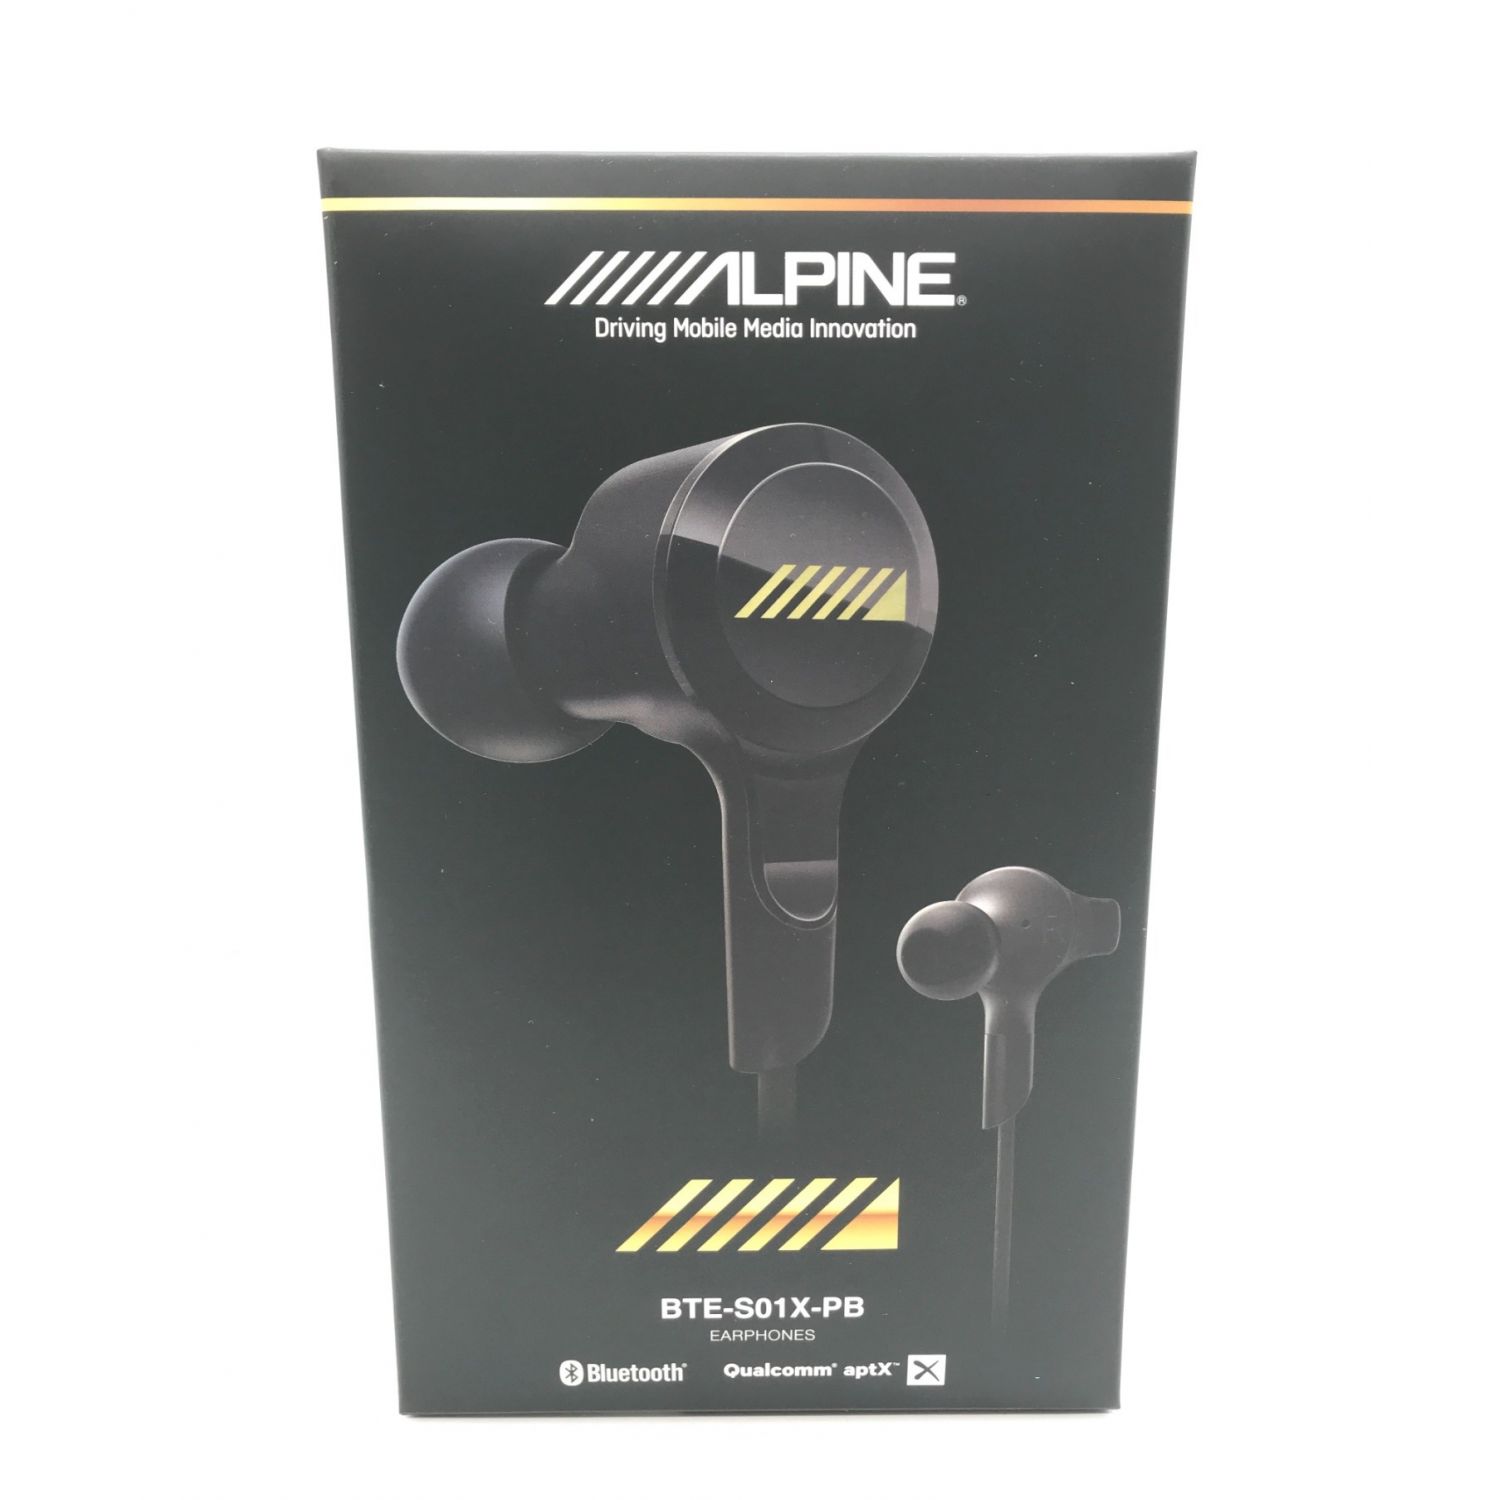 ALPINE (アルパイン) ワイヤレスイヤホン BTE-S01X-PB Bluetooth 